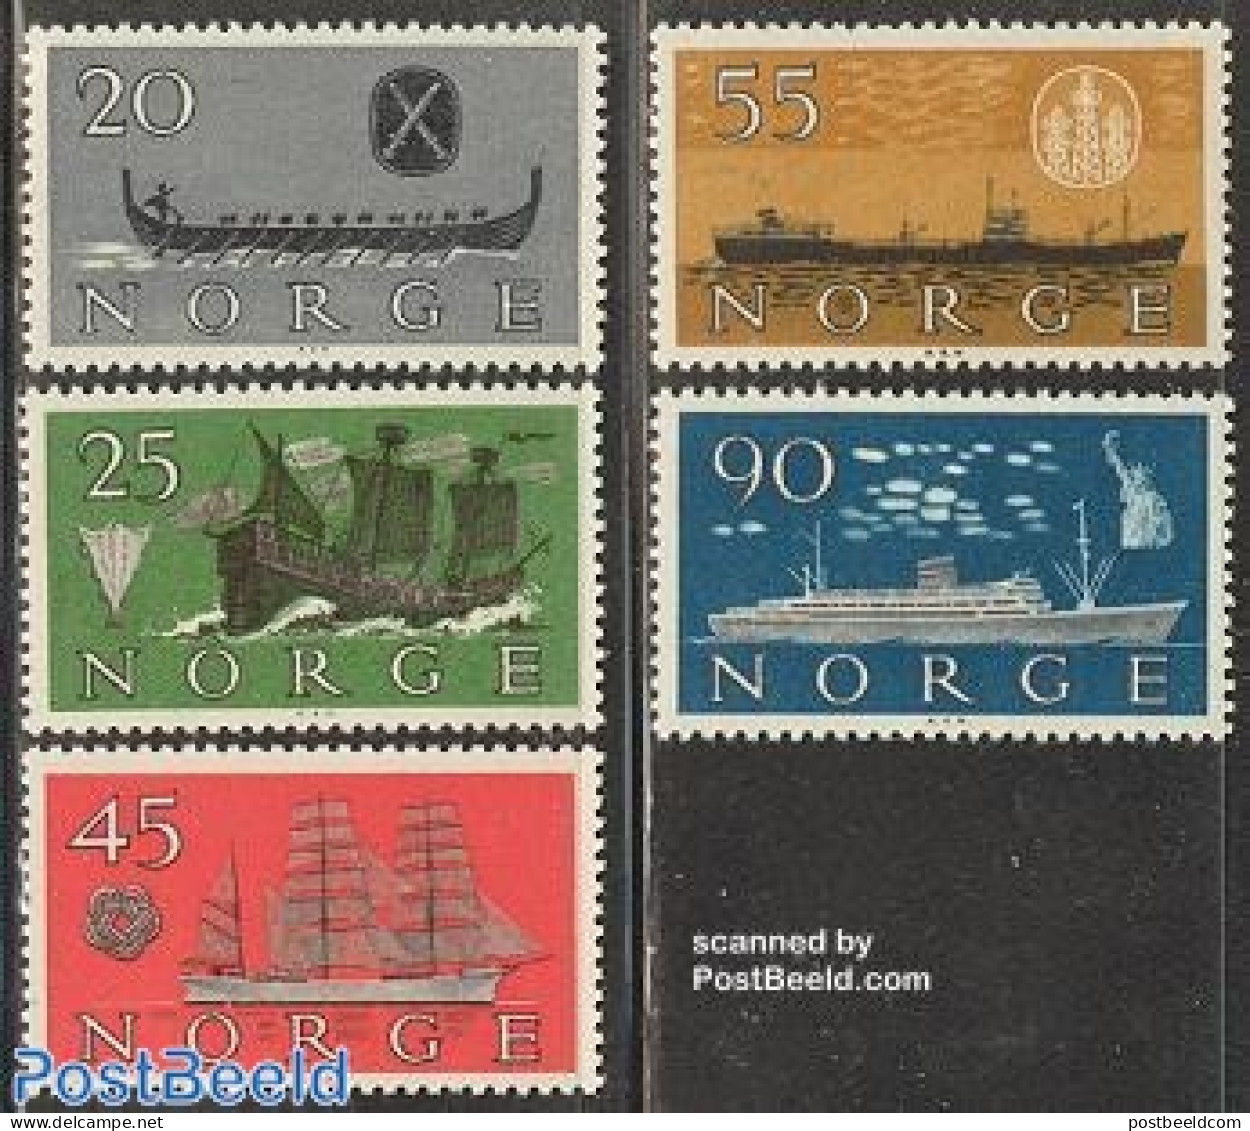 Norway 1960 Ships 5v, Mint NH, Transport - Ships And Boats - Ongebruikt